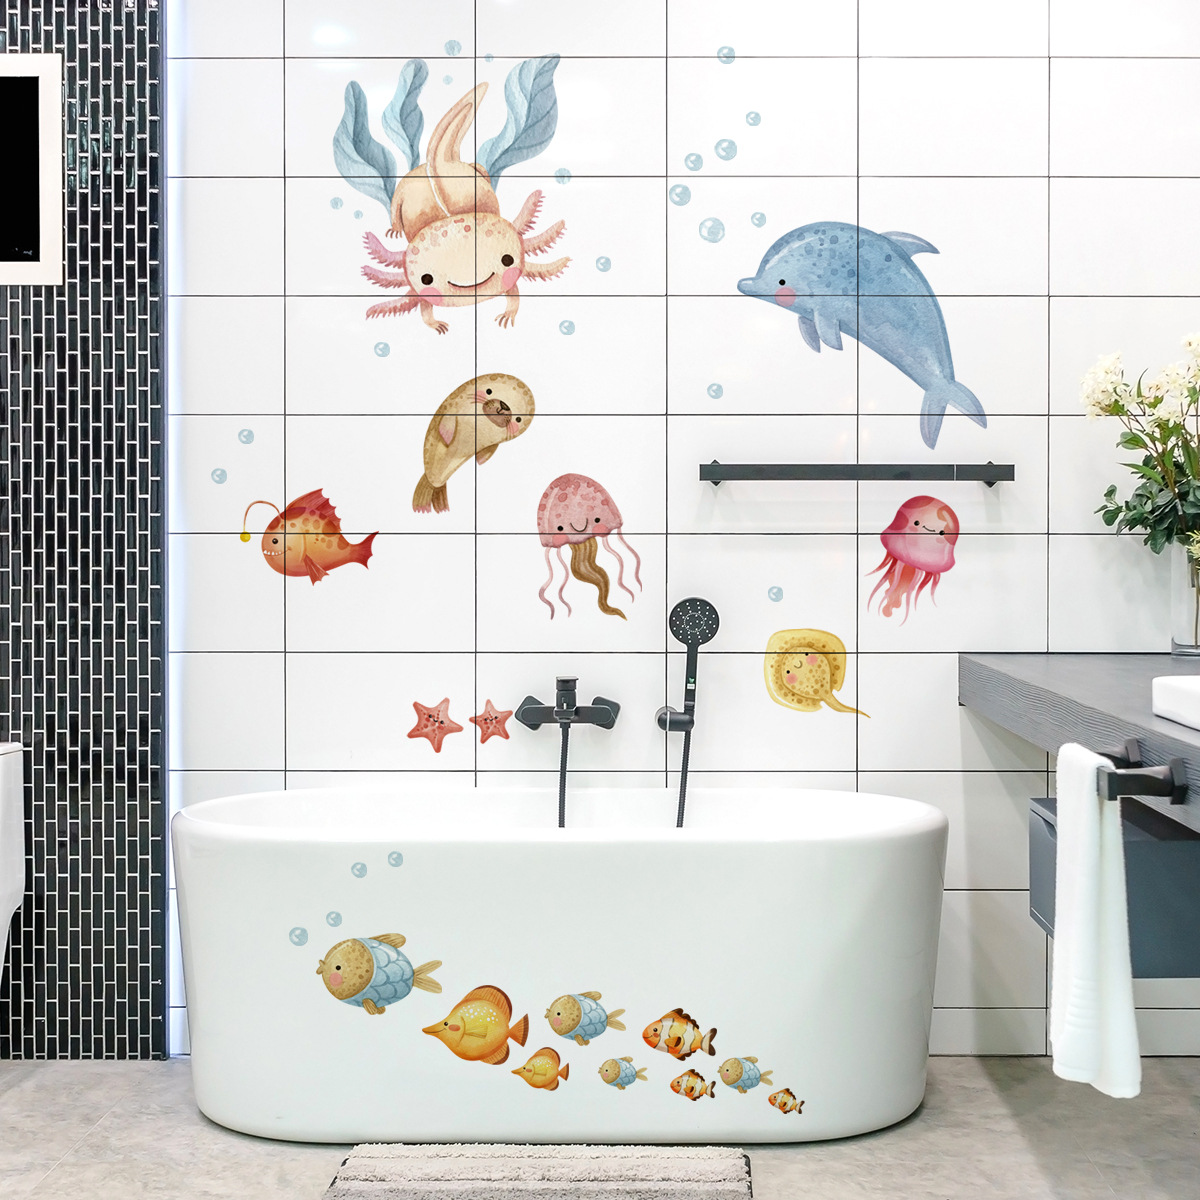 Washroom Wall Stickers Customized Waterproof Wall Stickers for Bathtub